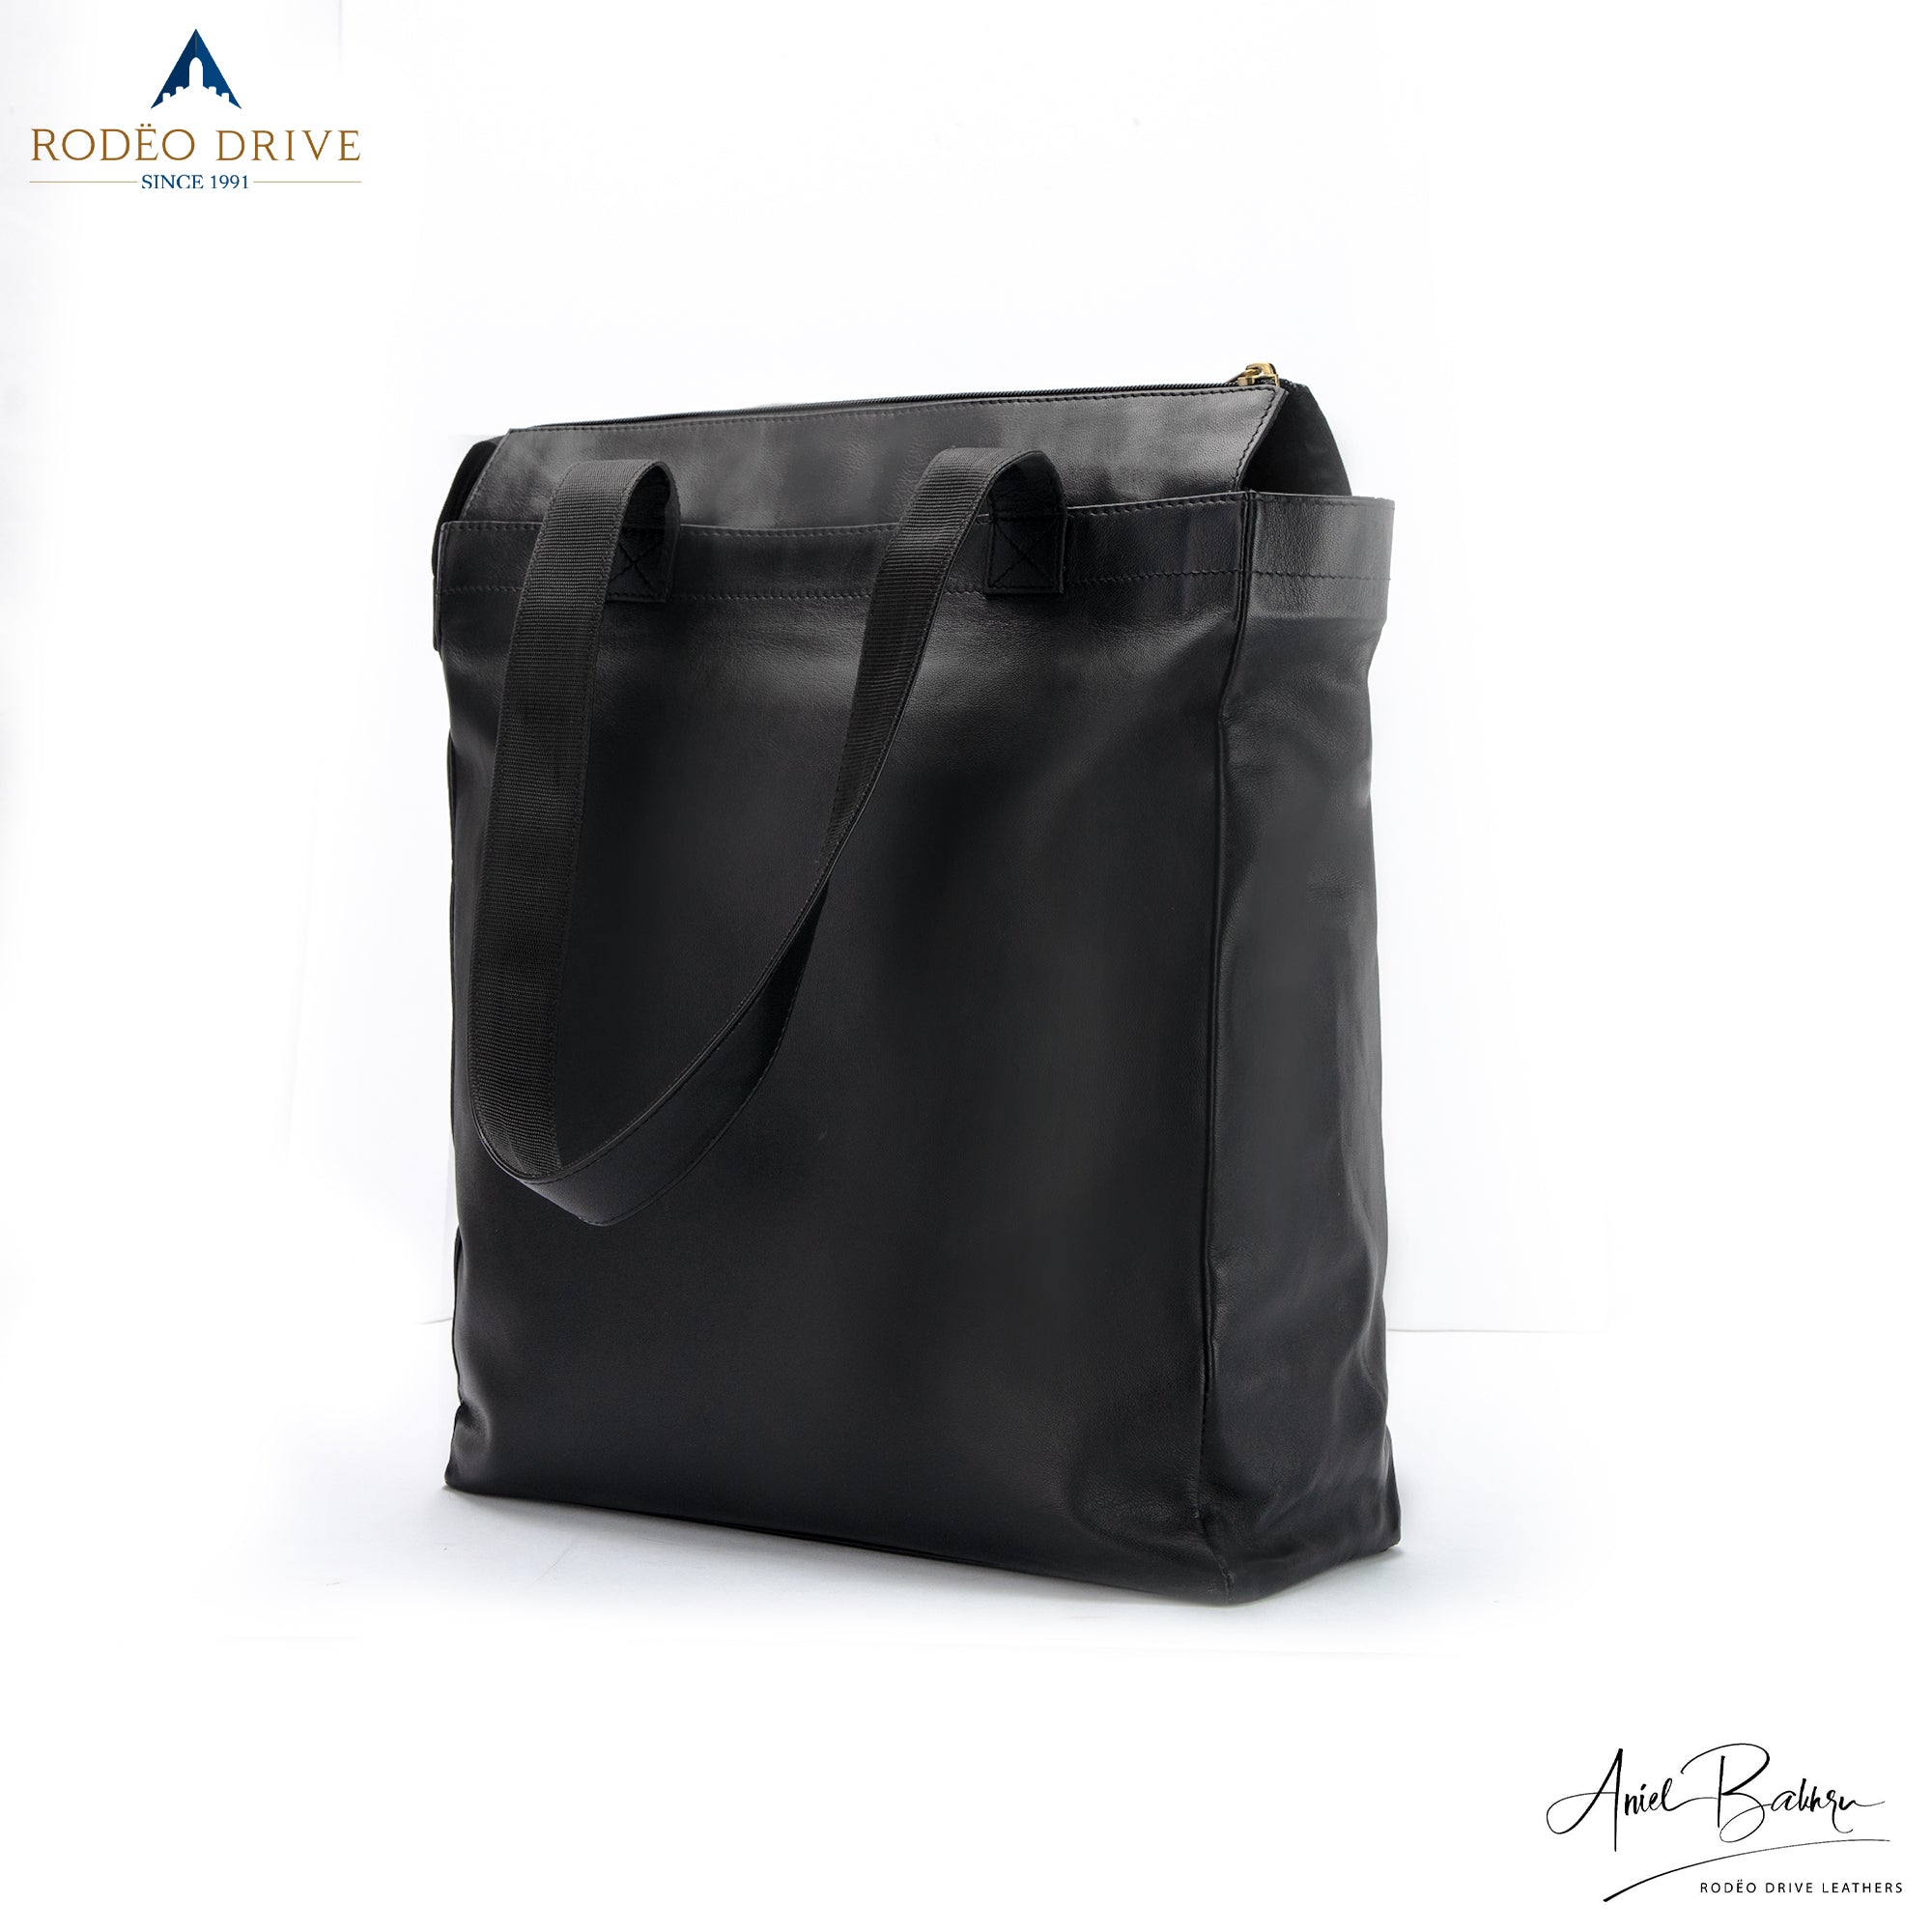 Image depicts Black Lamp chan bag